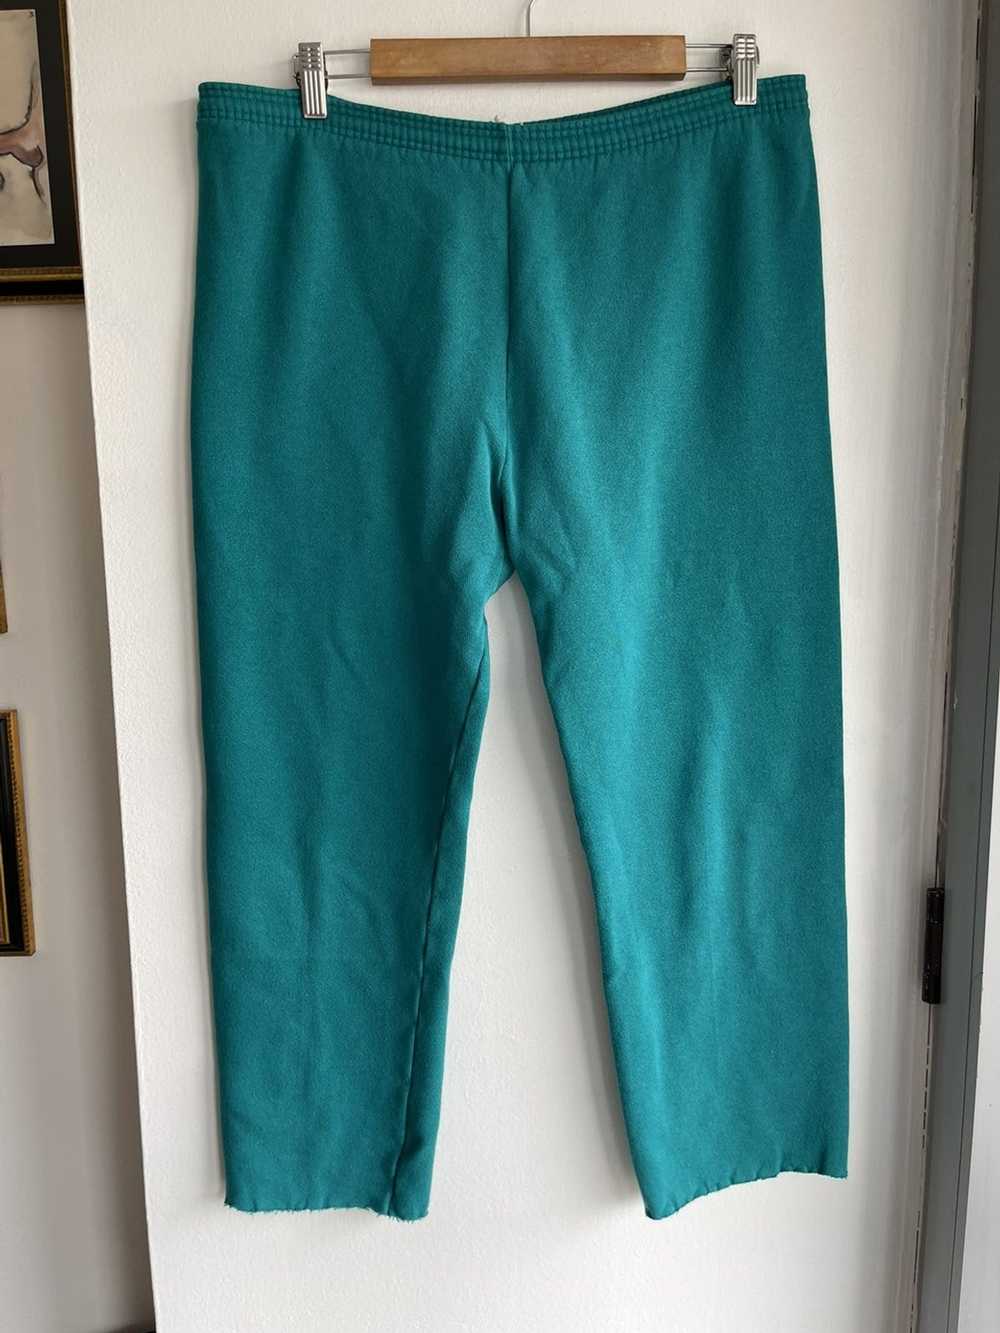 Vintage Vintage Turquoise Sweatpants SOFT & LIGHT - image 1